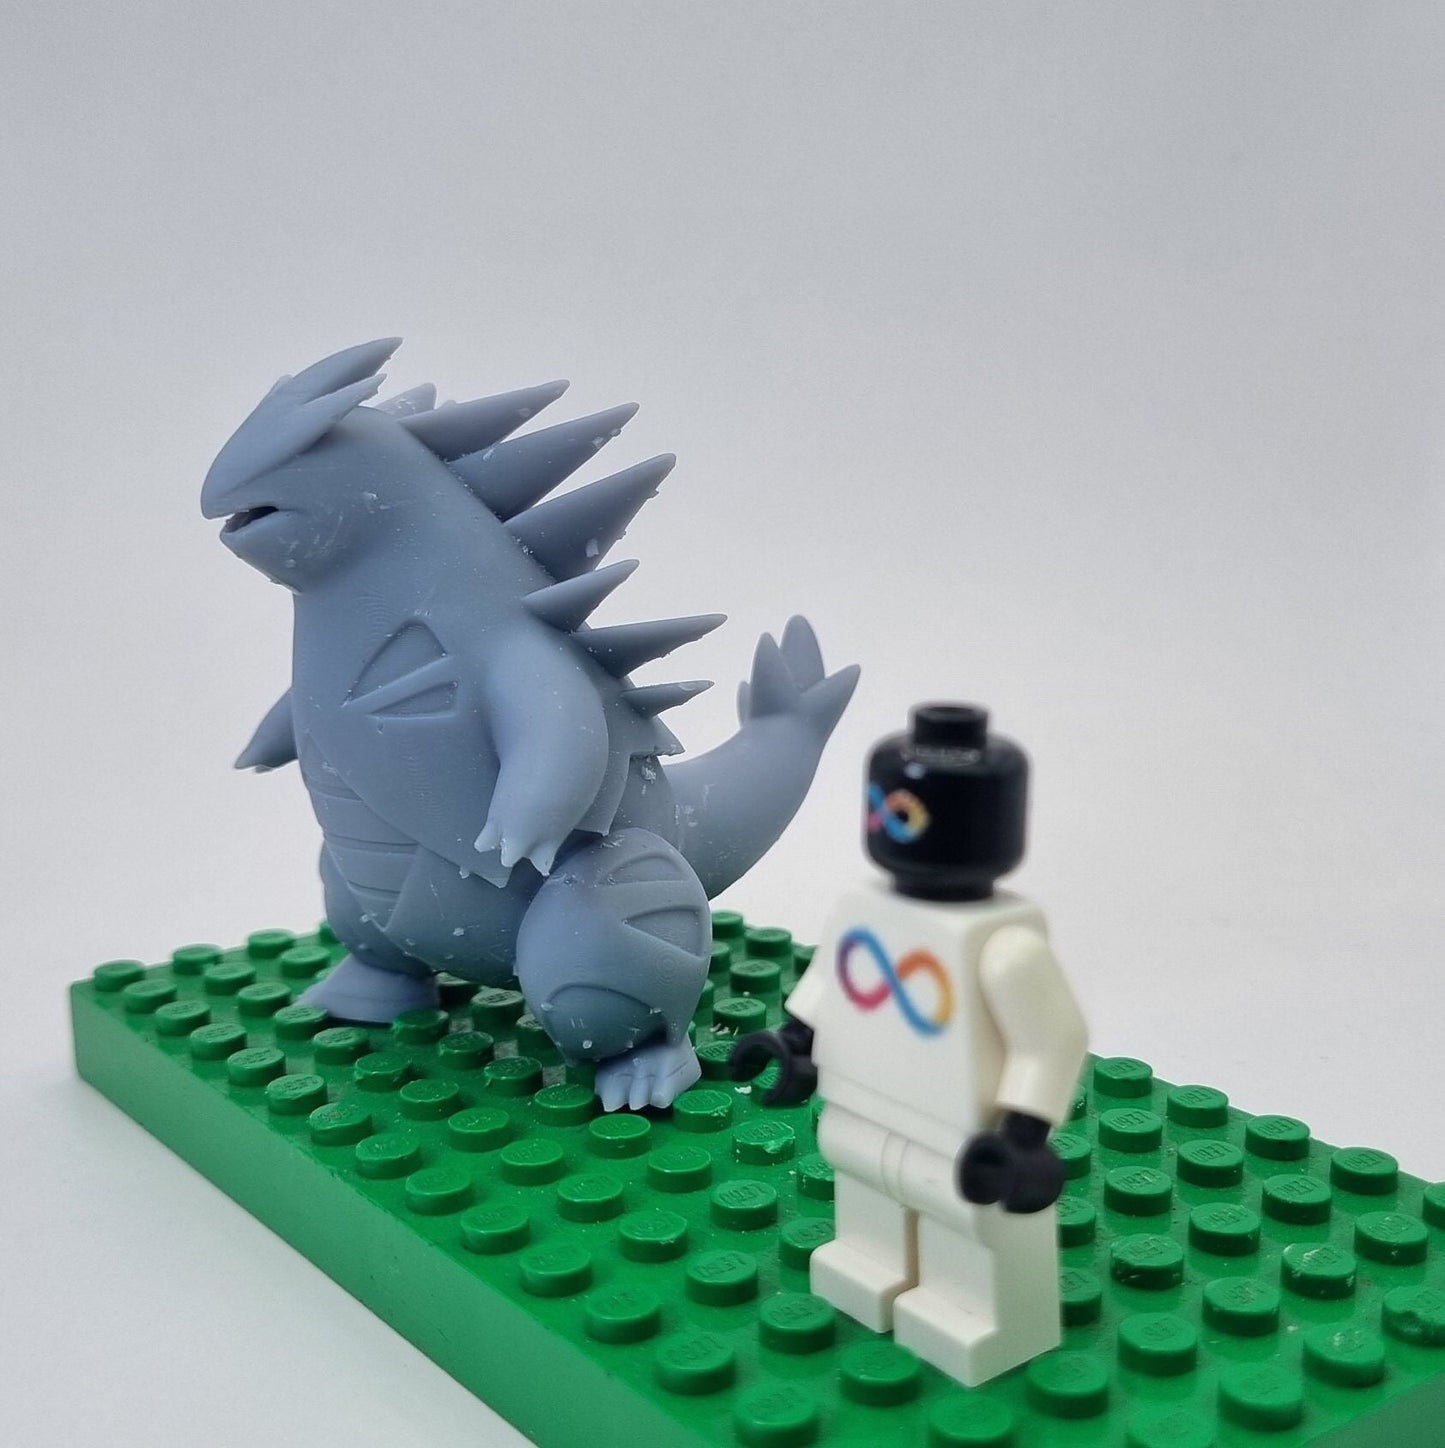 Building toy custom 3D printed animal to catch spikey dinosaur!